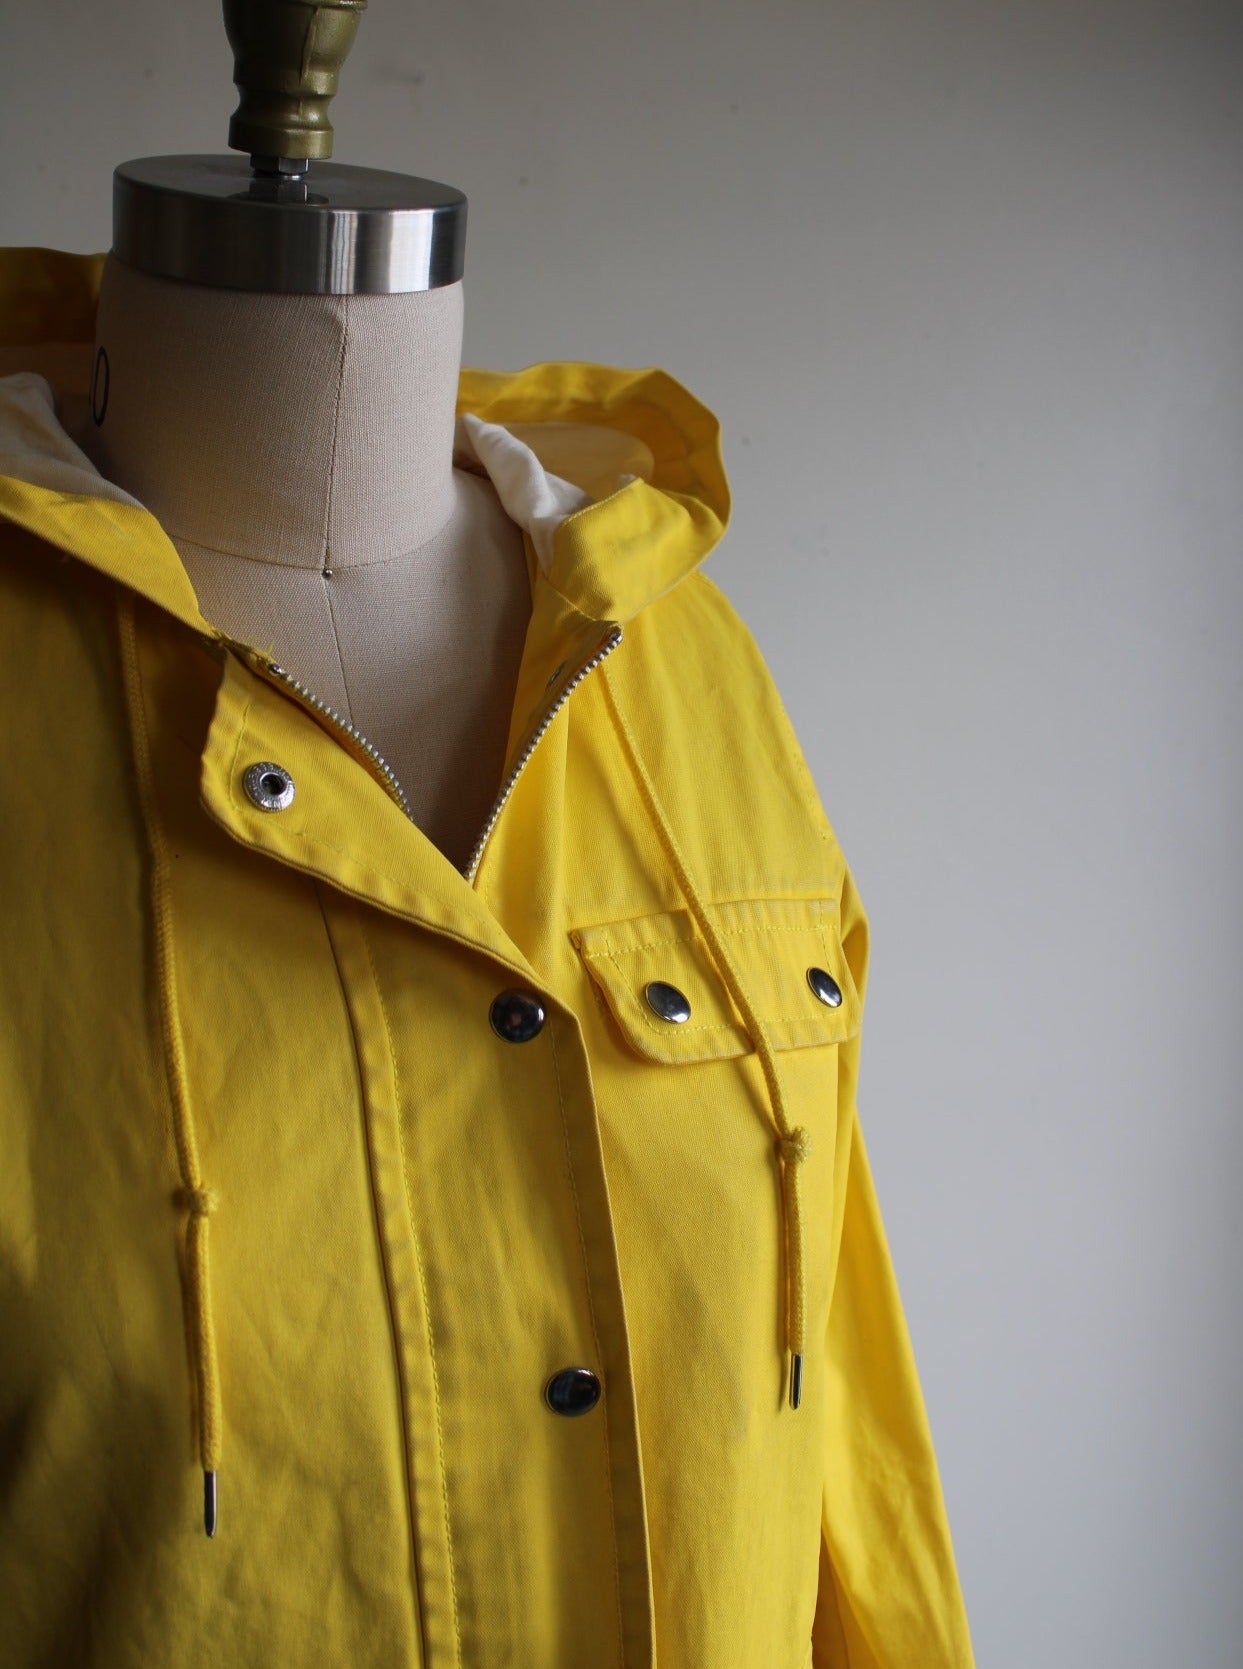 Vintage Yellow Short Rain Jacket